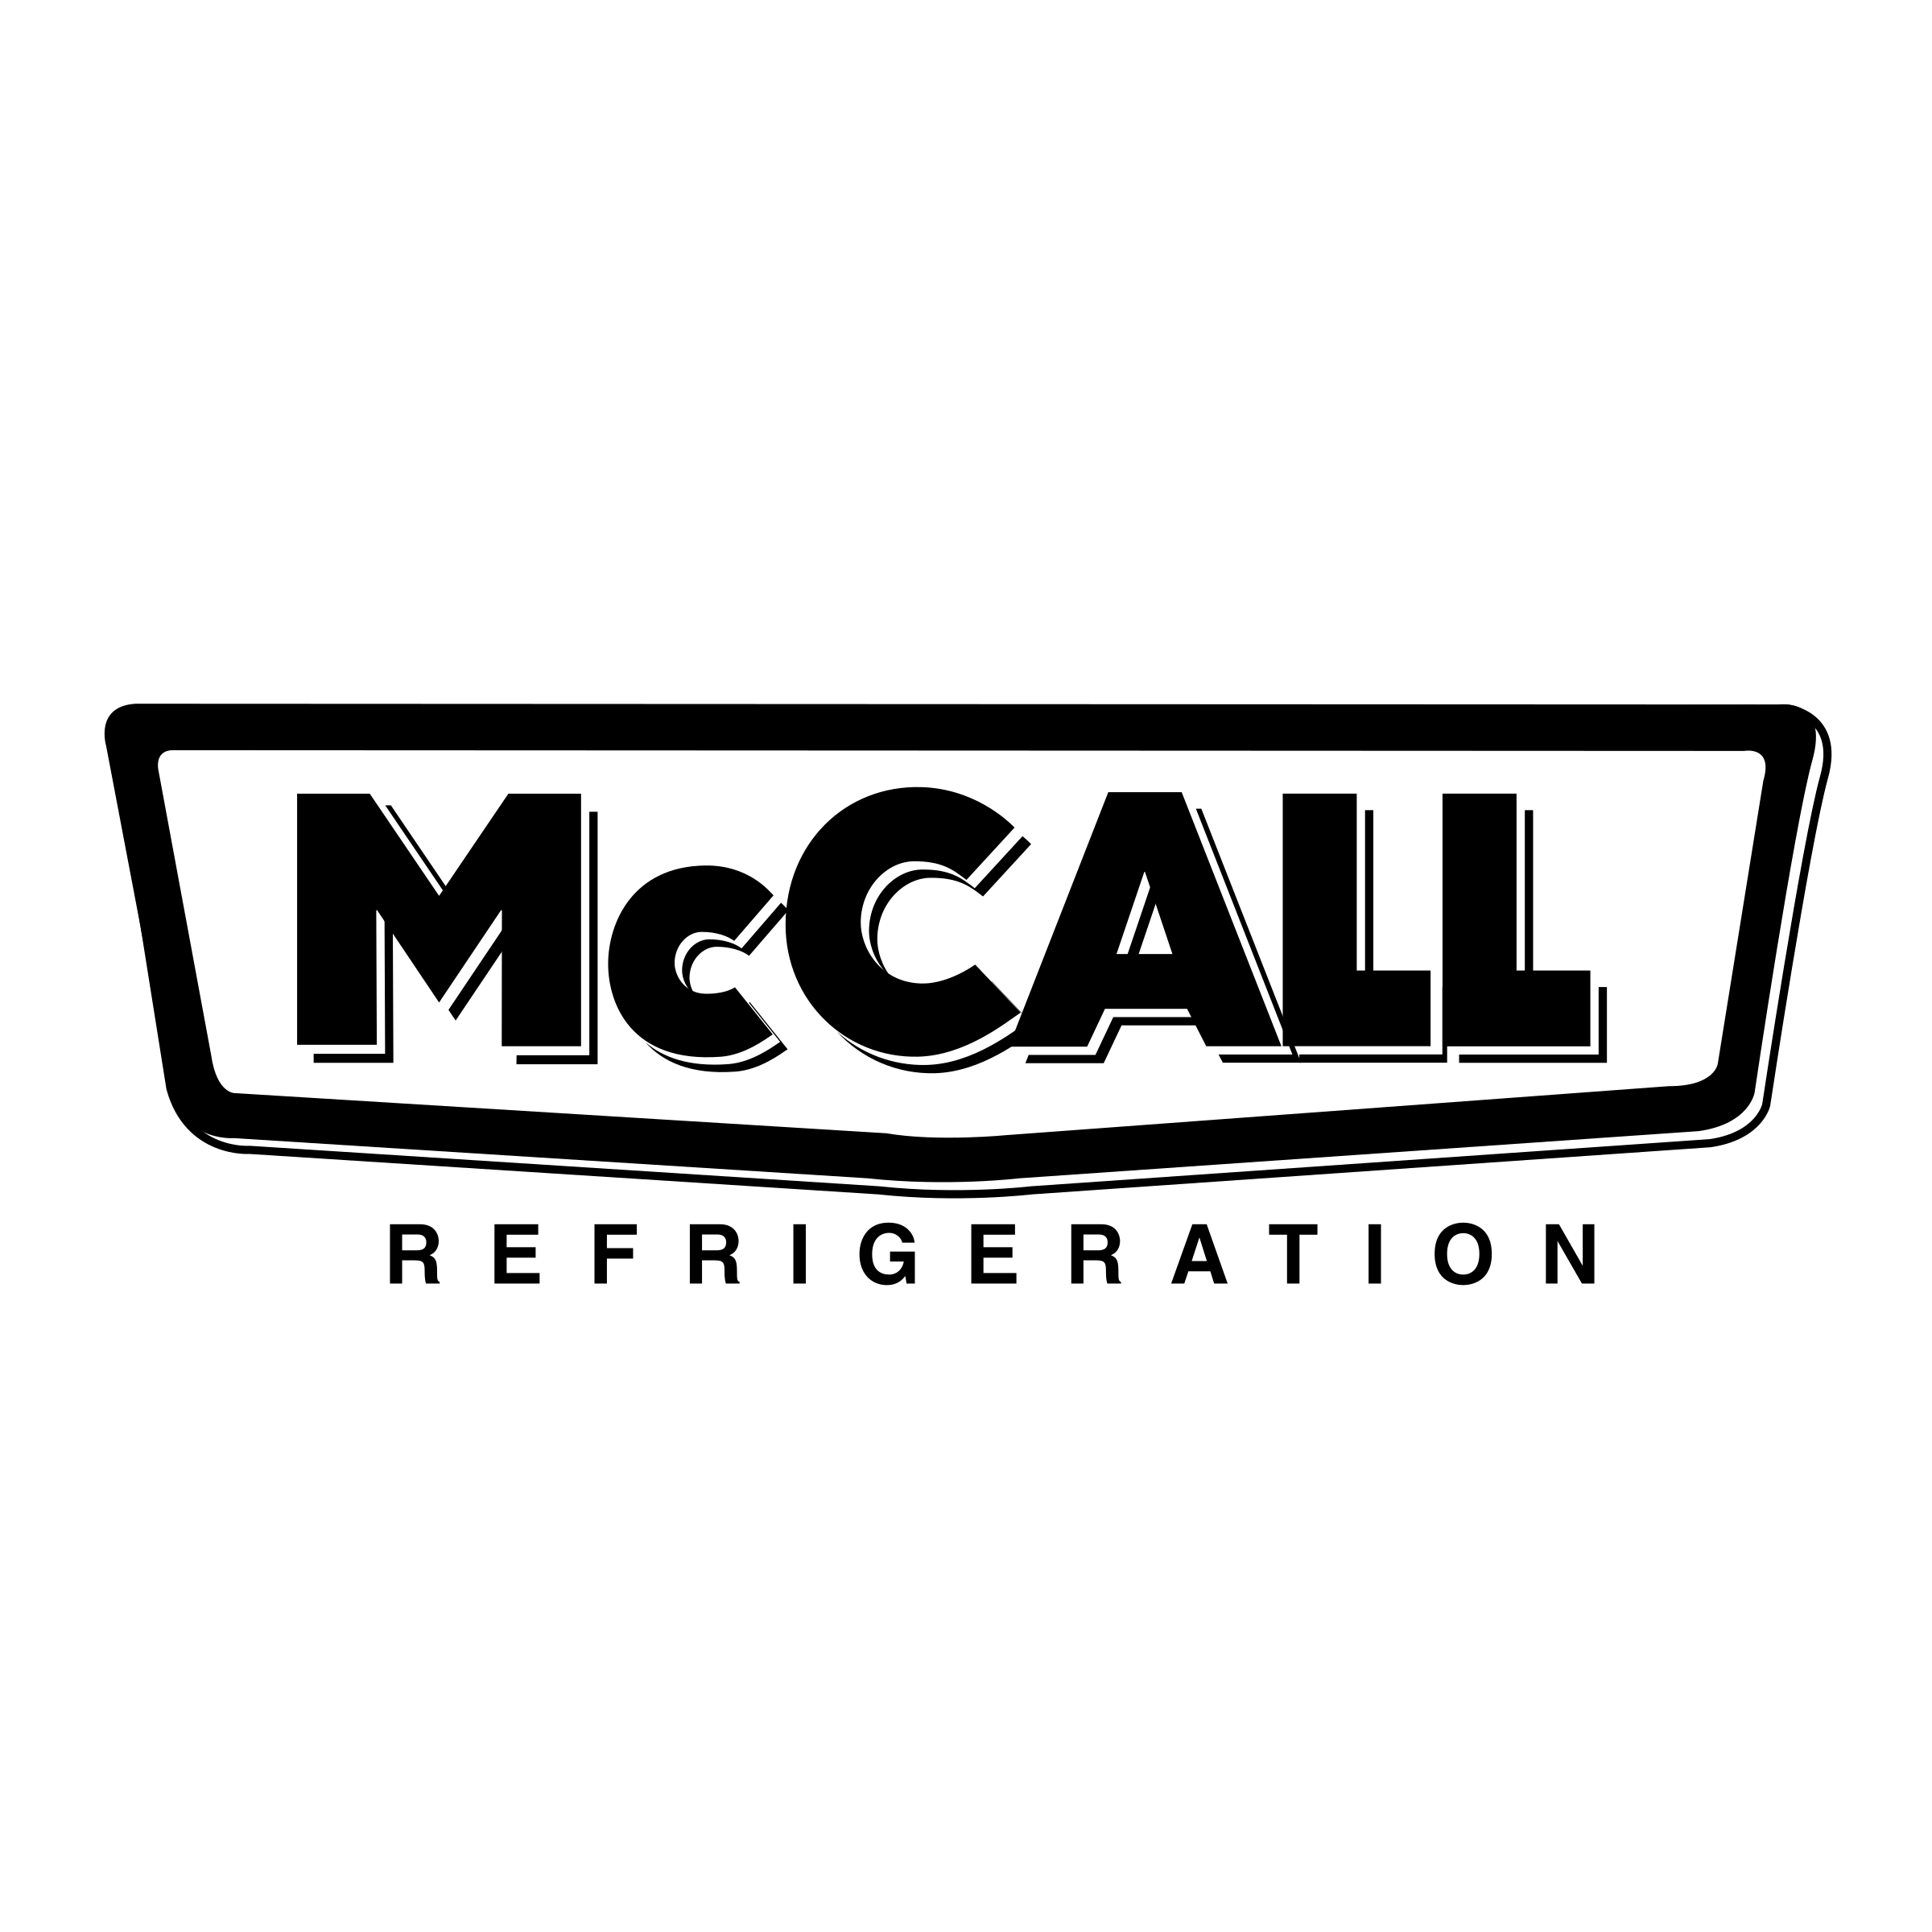 McCall Logo - McCALL Logo PNG Transparent & SVG Vector - Freebie Supply